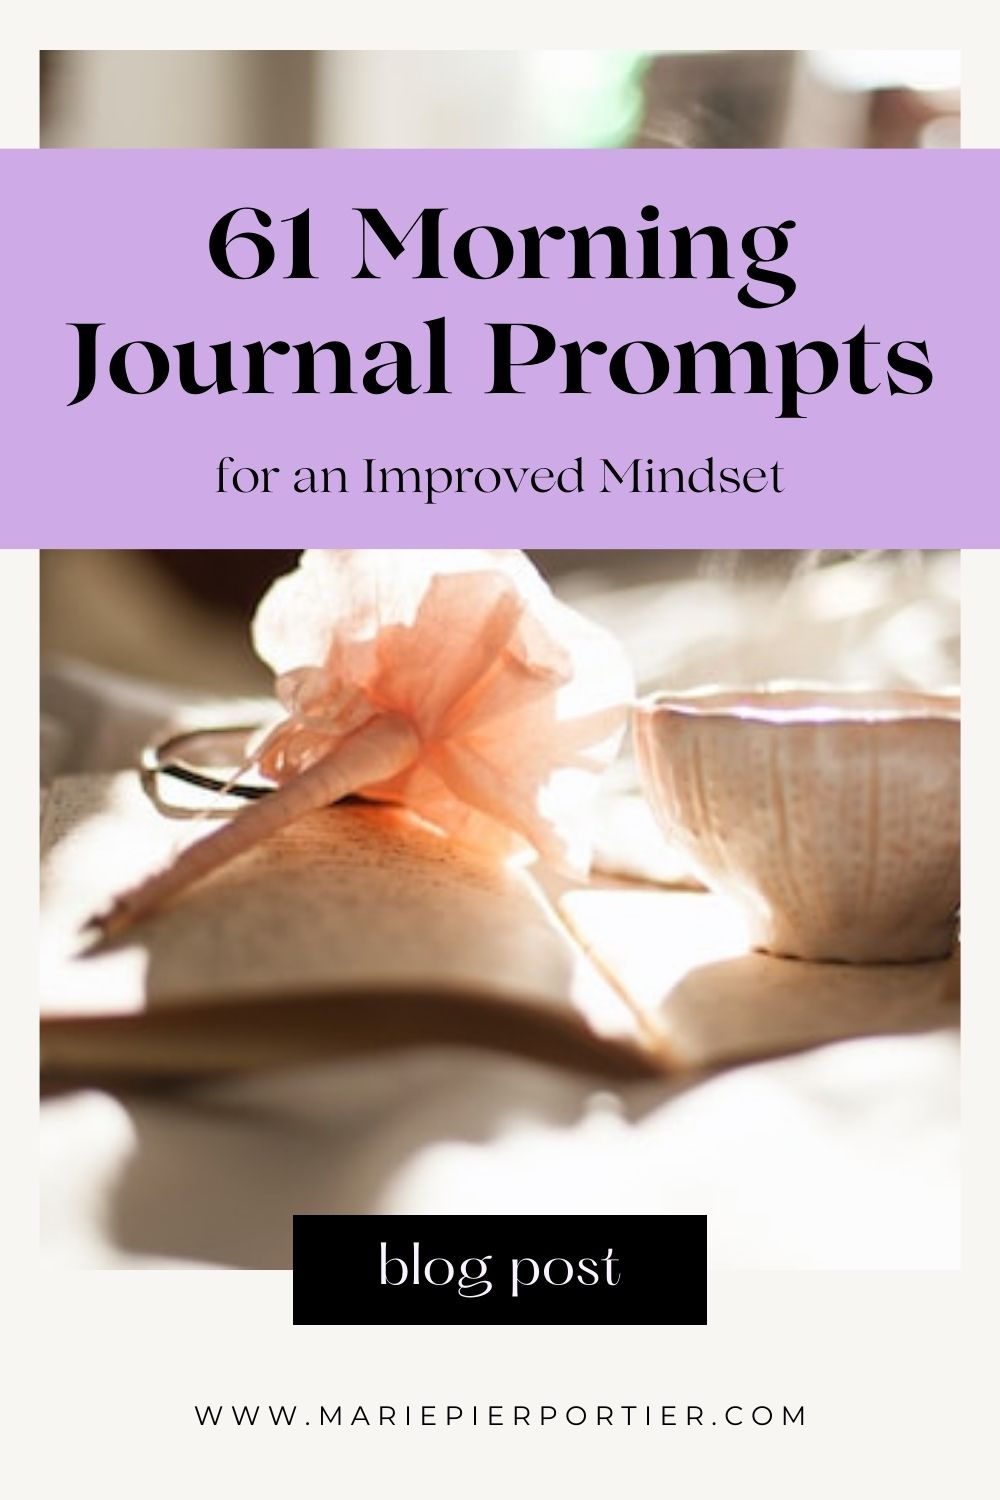 61 Morning Journal Prompts for an Improved Mindset